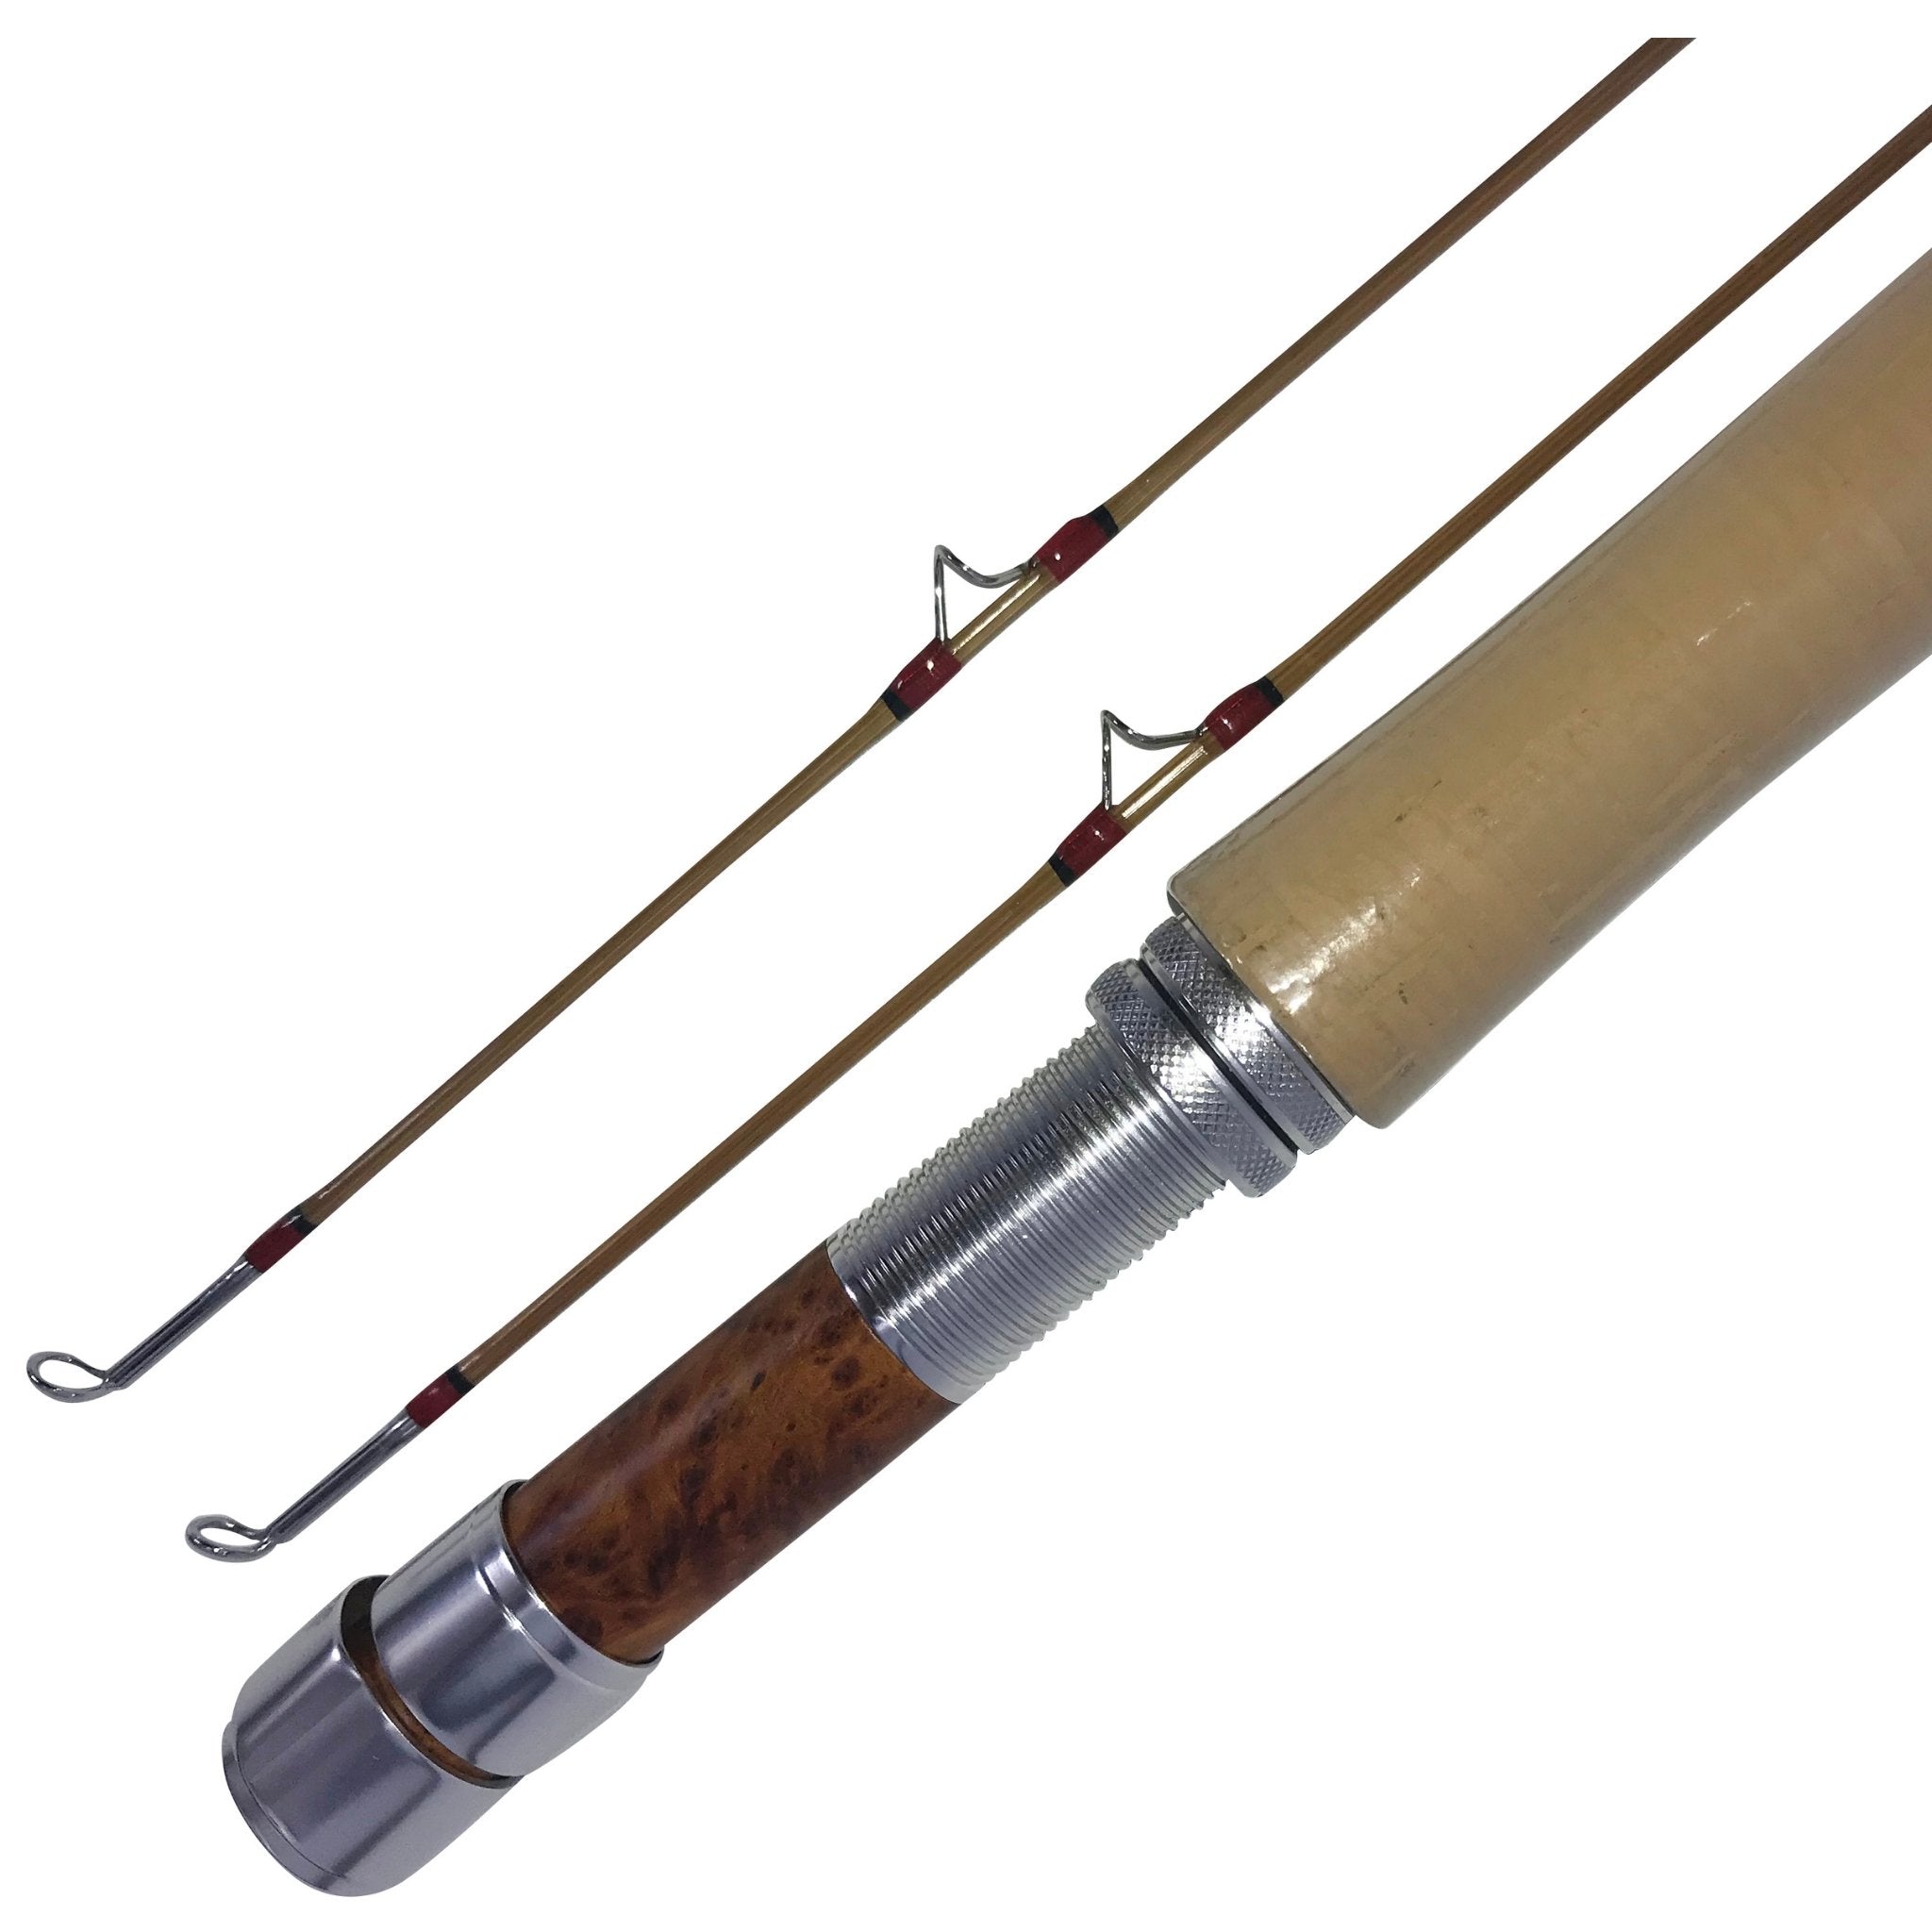 The Metolius 7' 6 5-wt Medium Action Bamboo Fly Rod